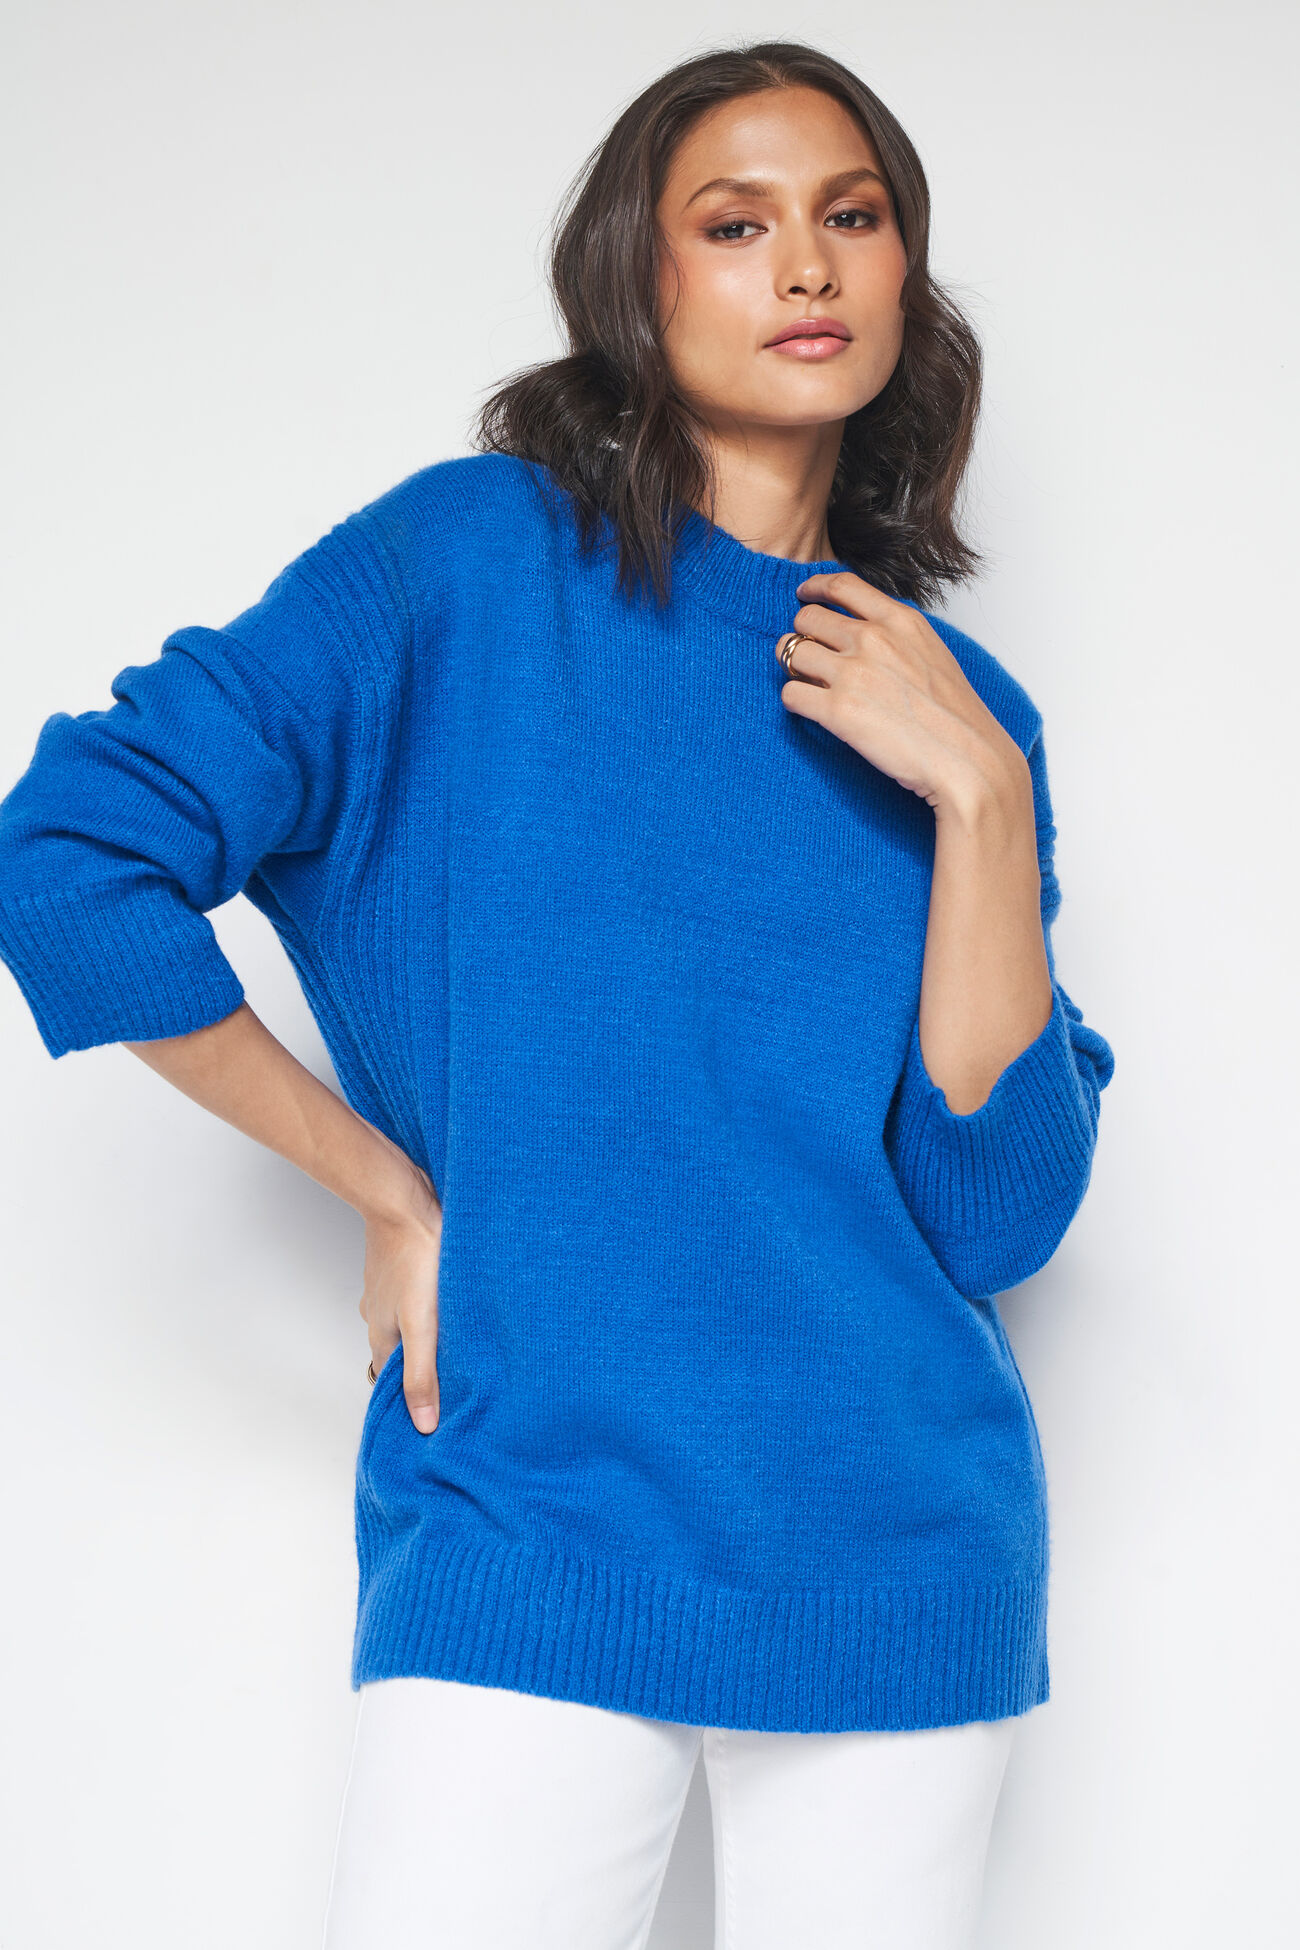 Aspen Over-Sized Sweater, Blue, image 6